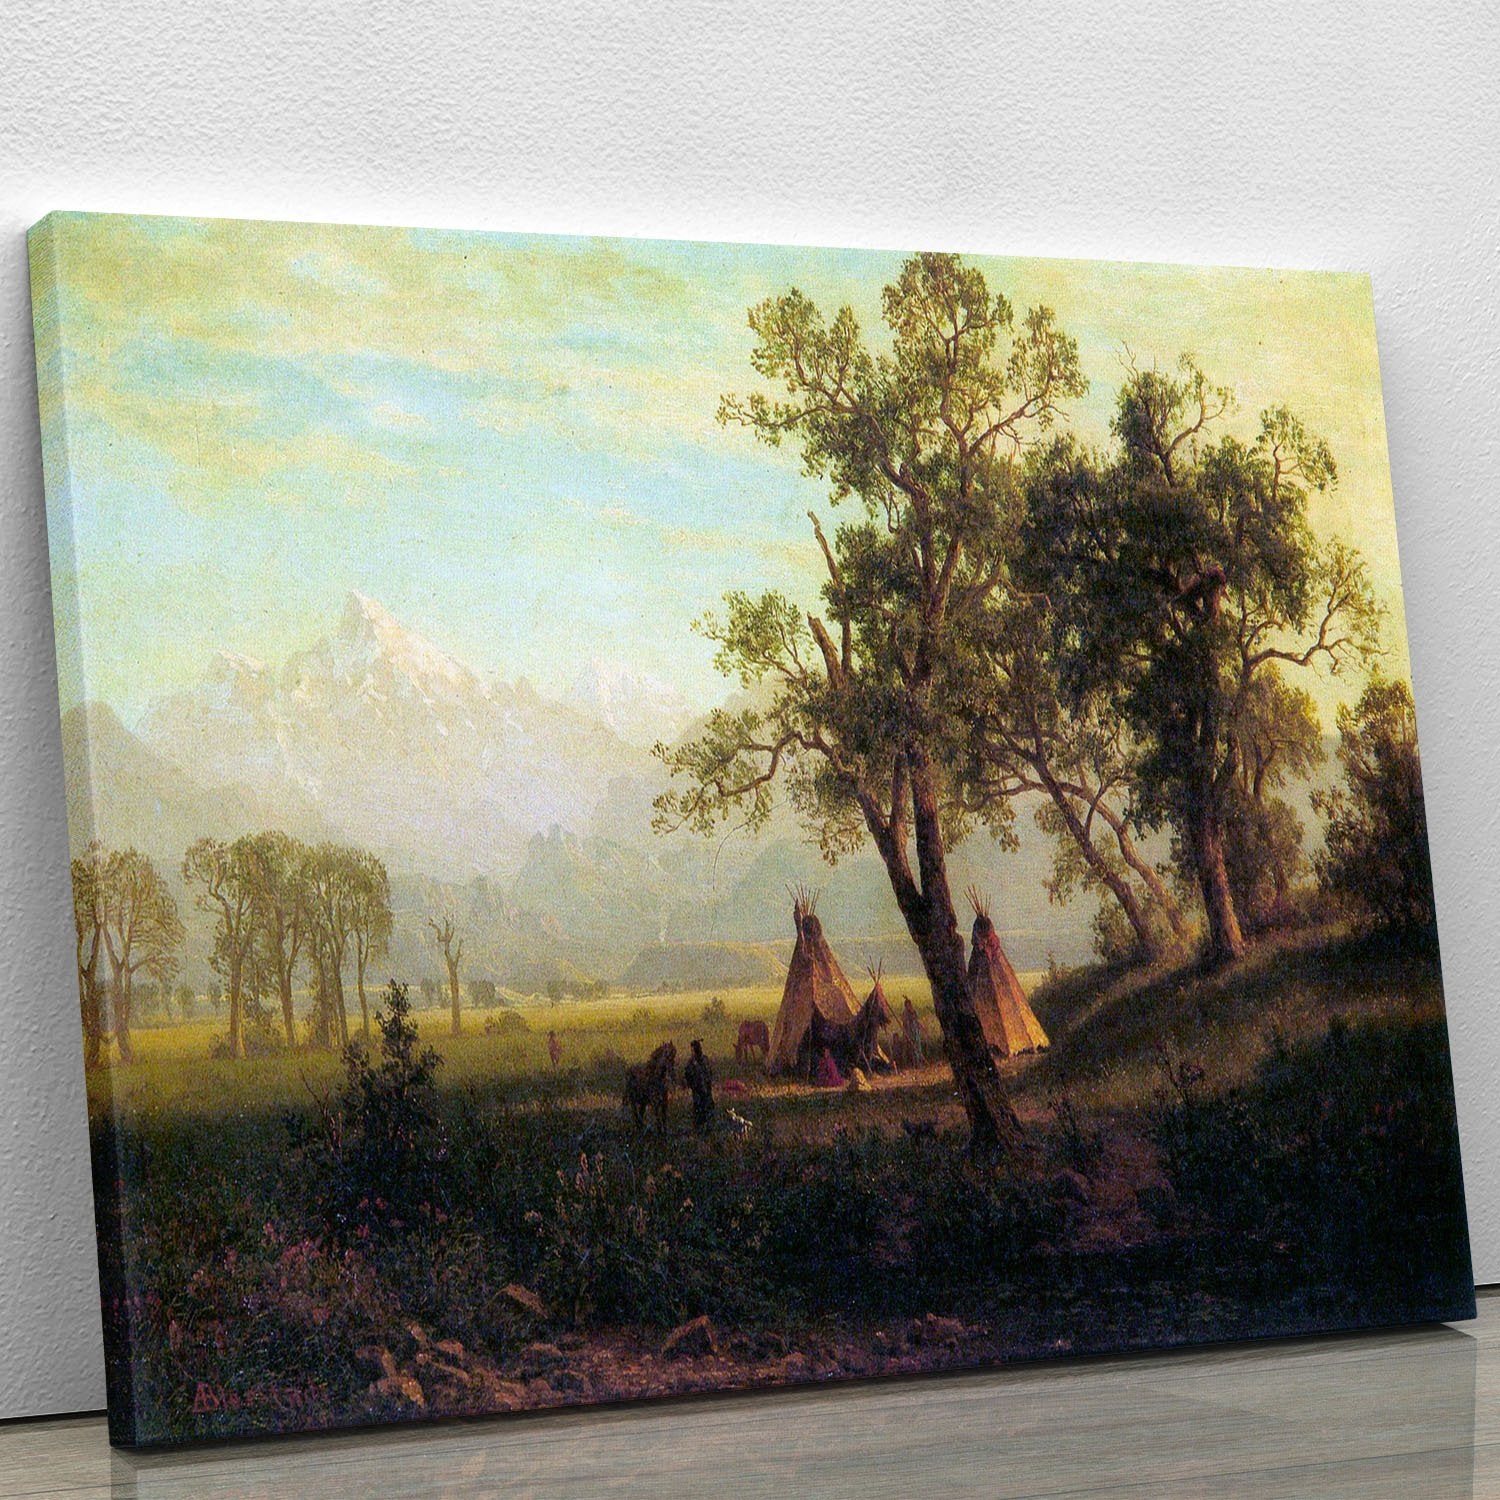 Wind River Mountains in Nebraska by Bierstadt Canvas Print or Poster